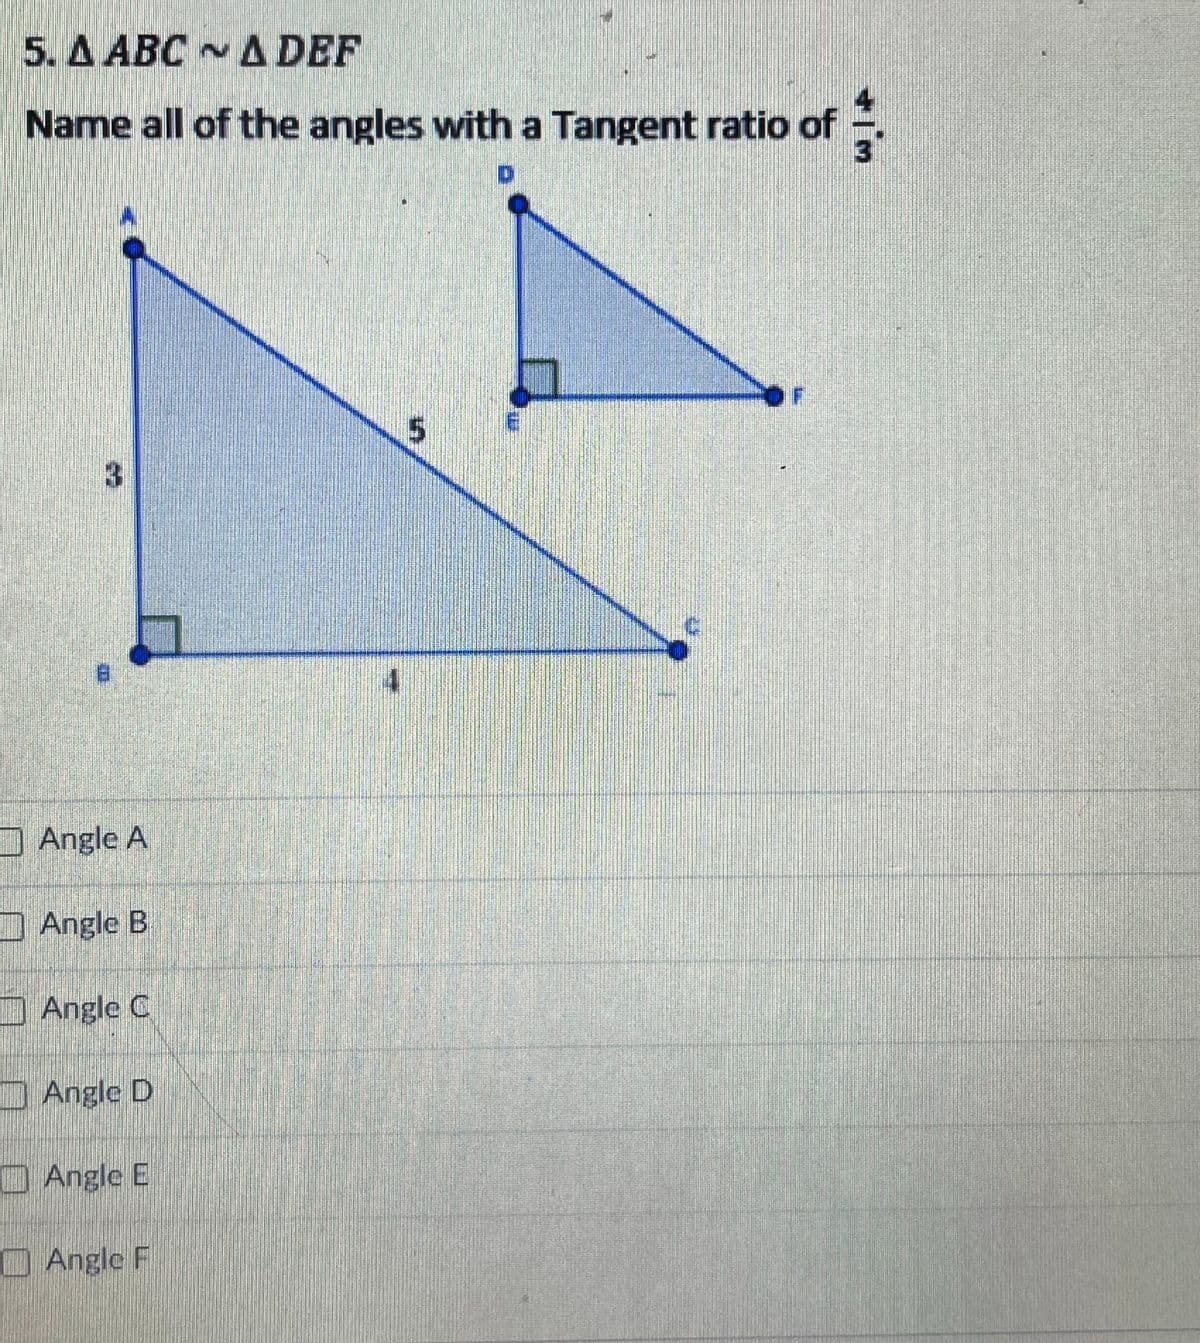 5. A ABC A DEF
Name all of the angles with a Tangent ratio of
3.
Angle A
Angle B
DAngle C
Angle D
OAngle E
Angle F
